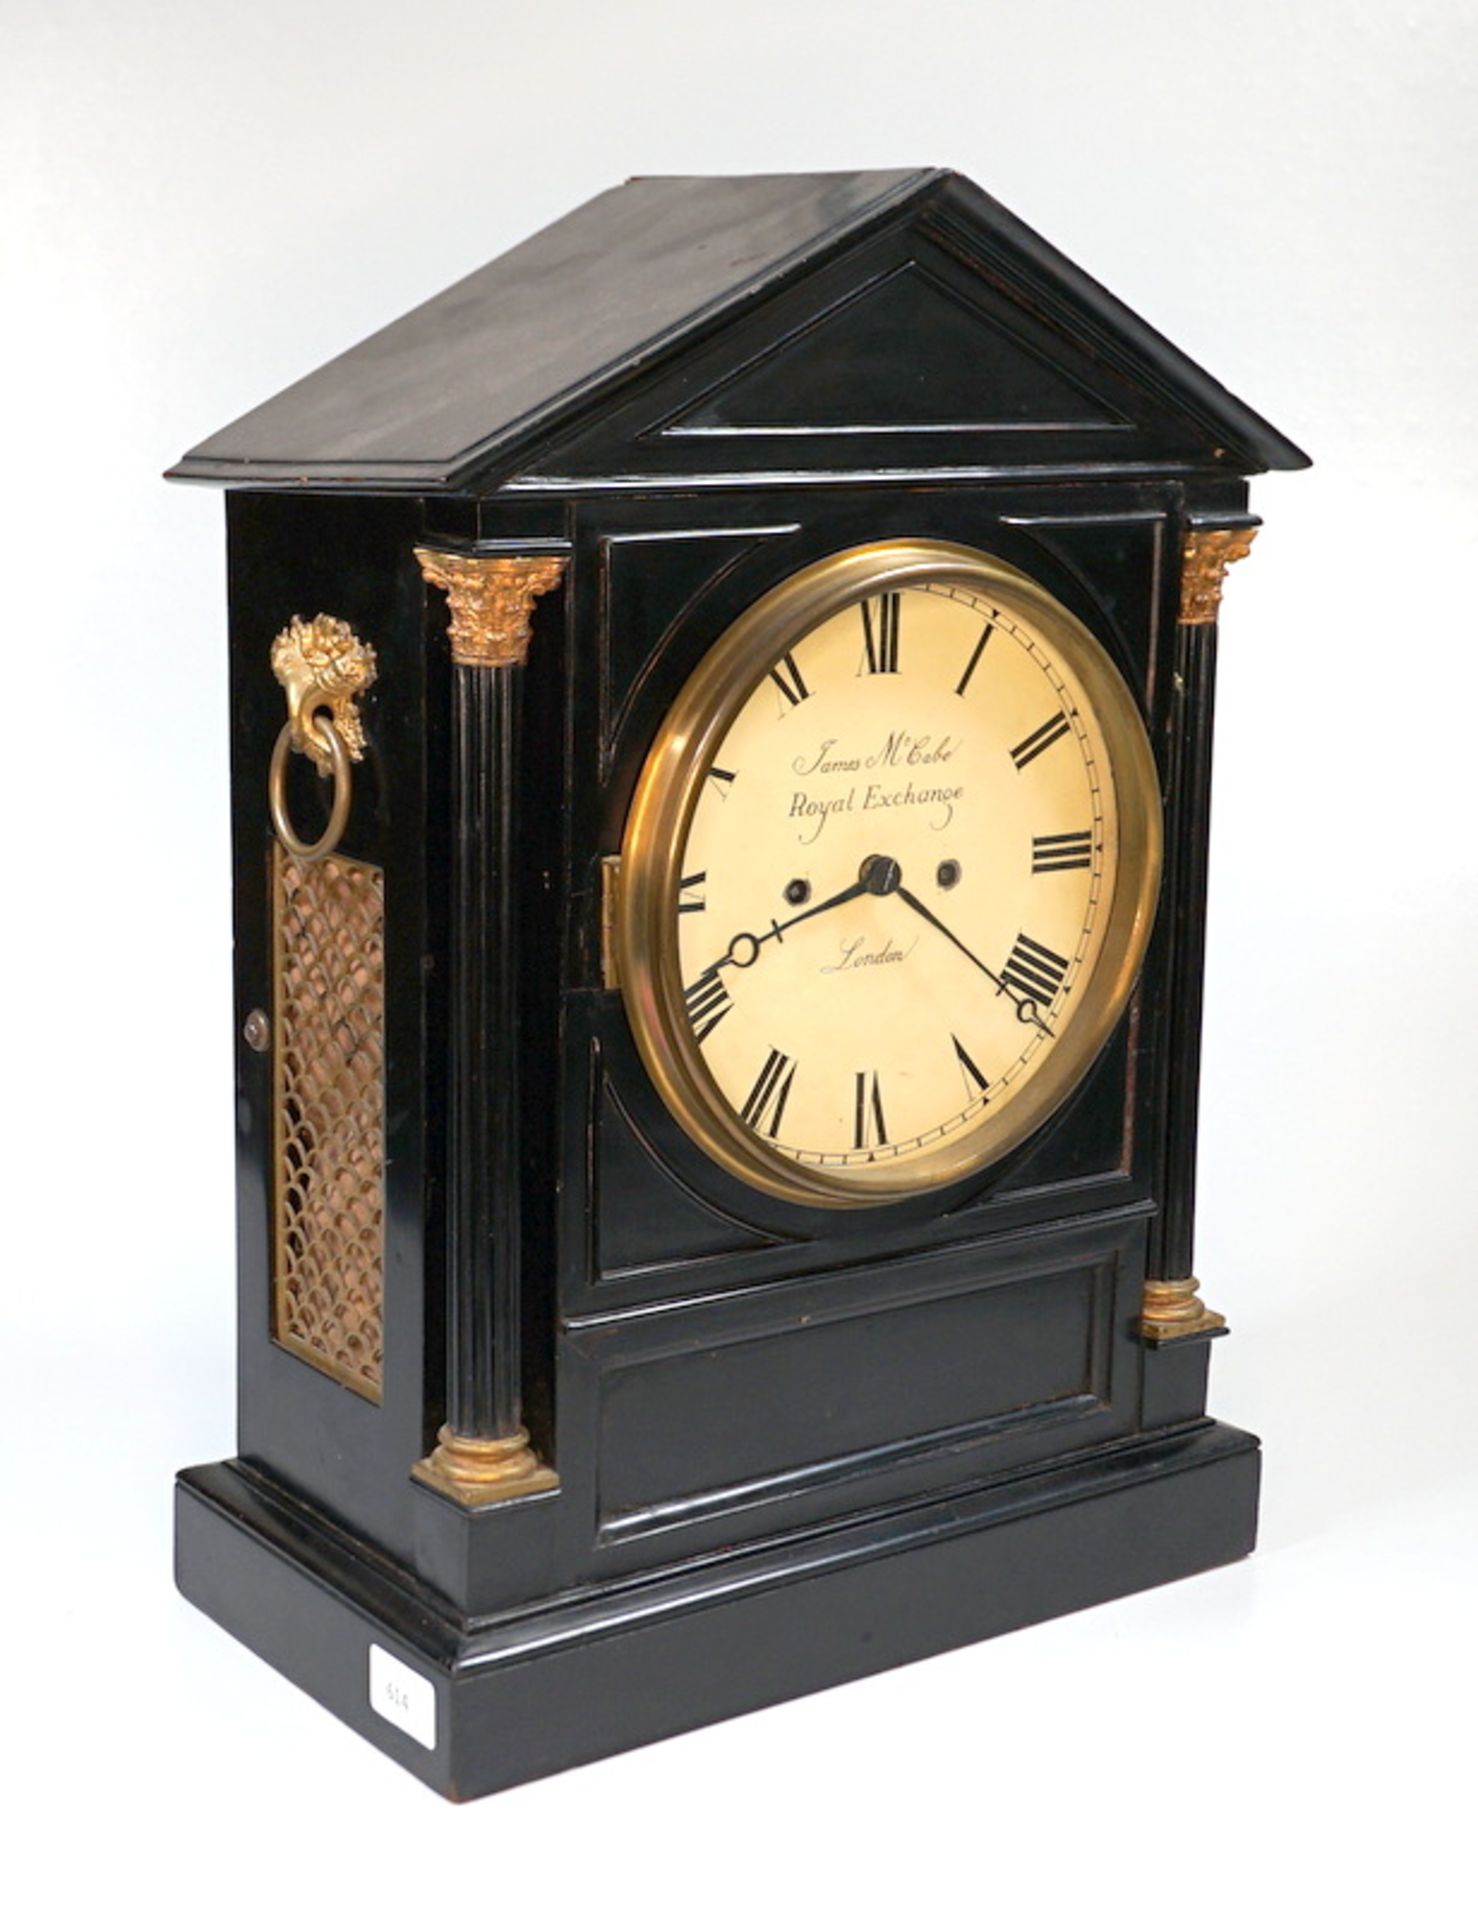 Bracket Clock James Mc Cabe Royal Exchange London Regency